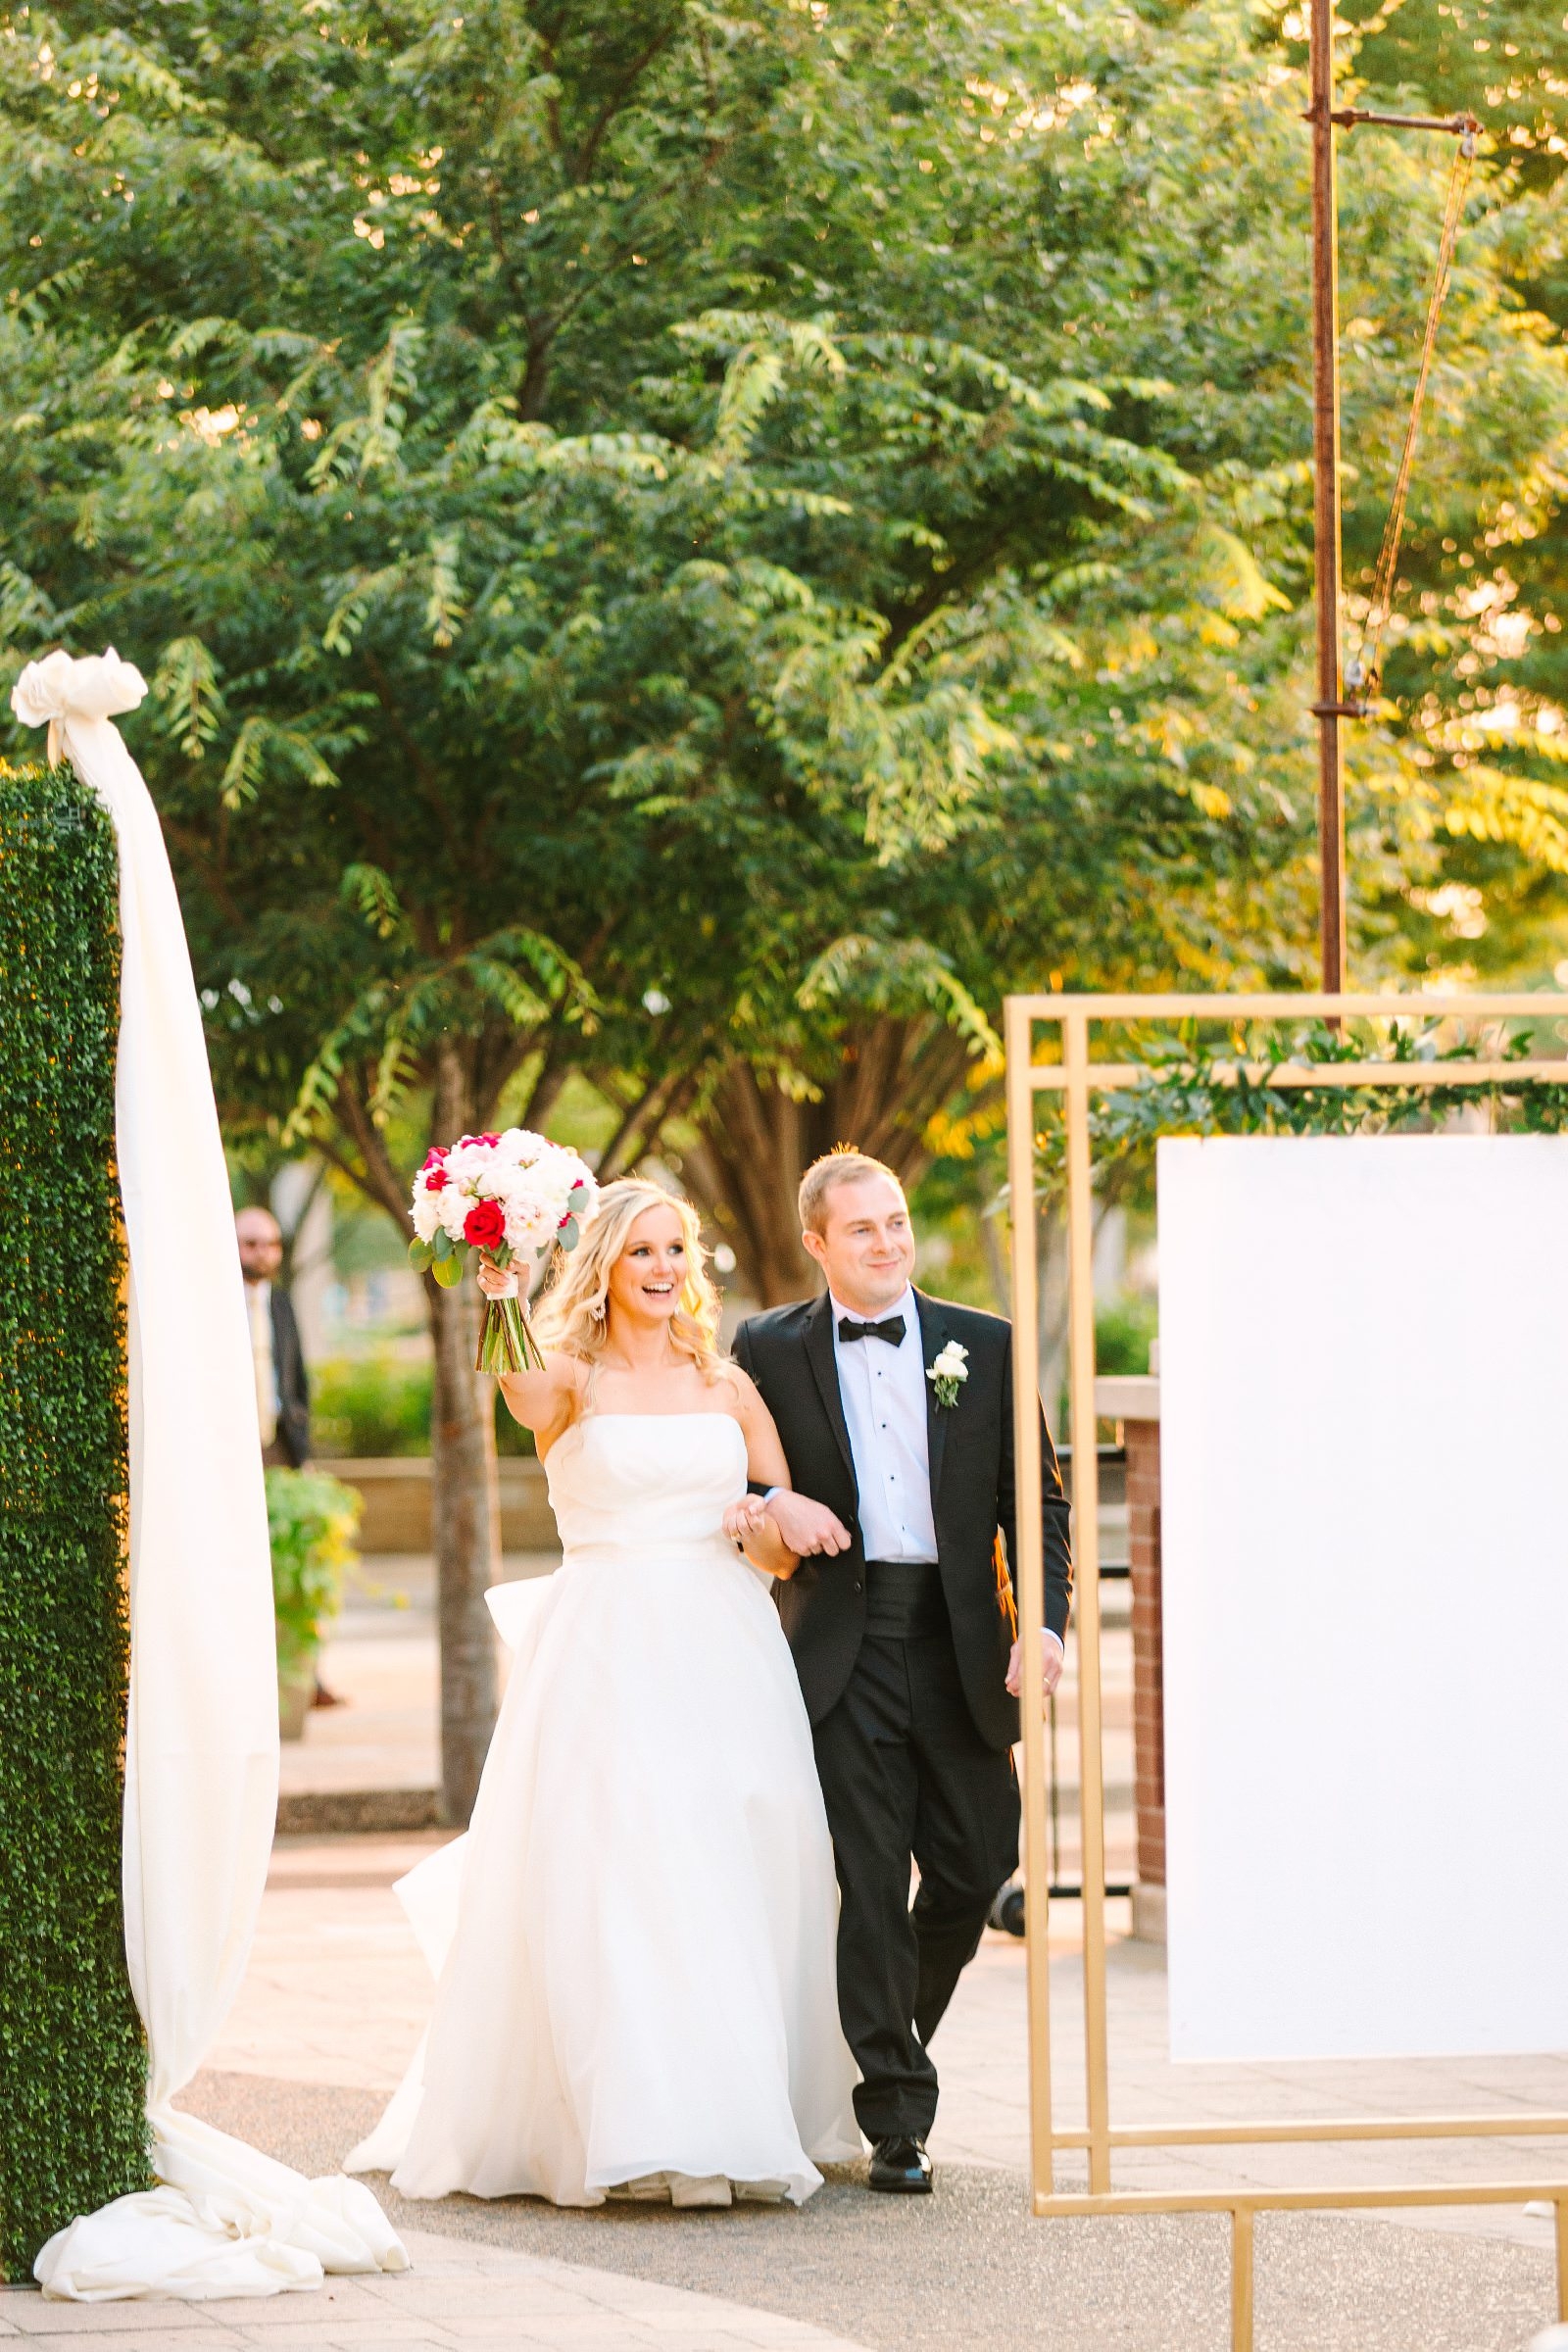 A Downtown Owensboro Wedding at River Park Center | Kaitlin & Justin148.jpg